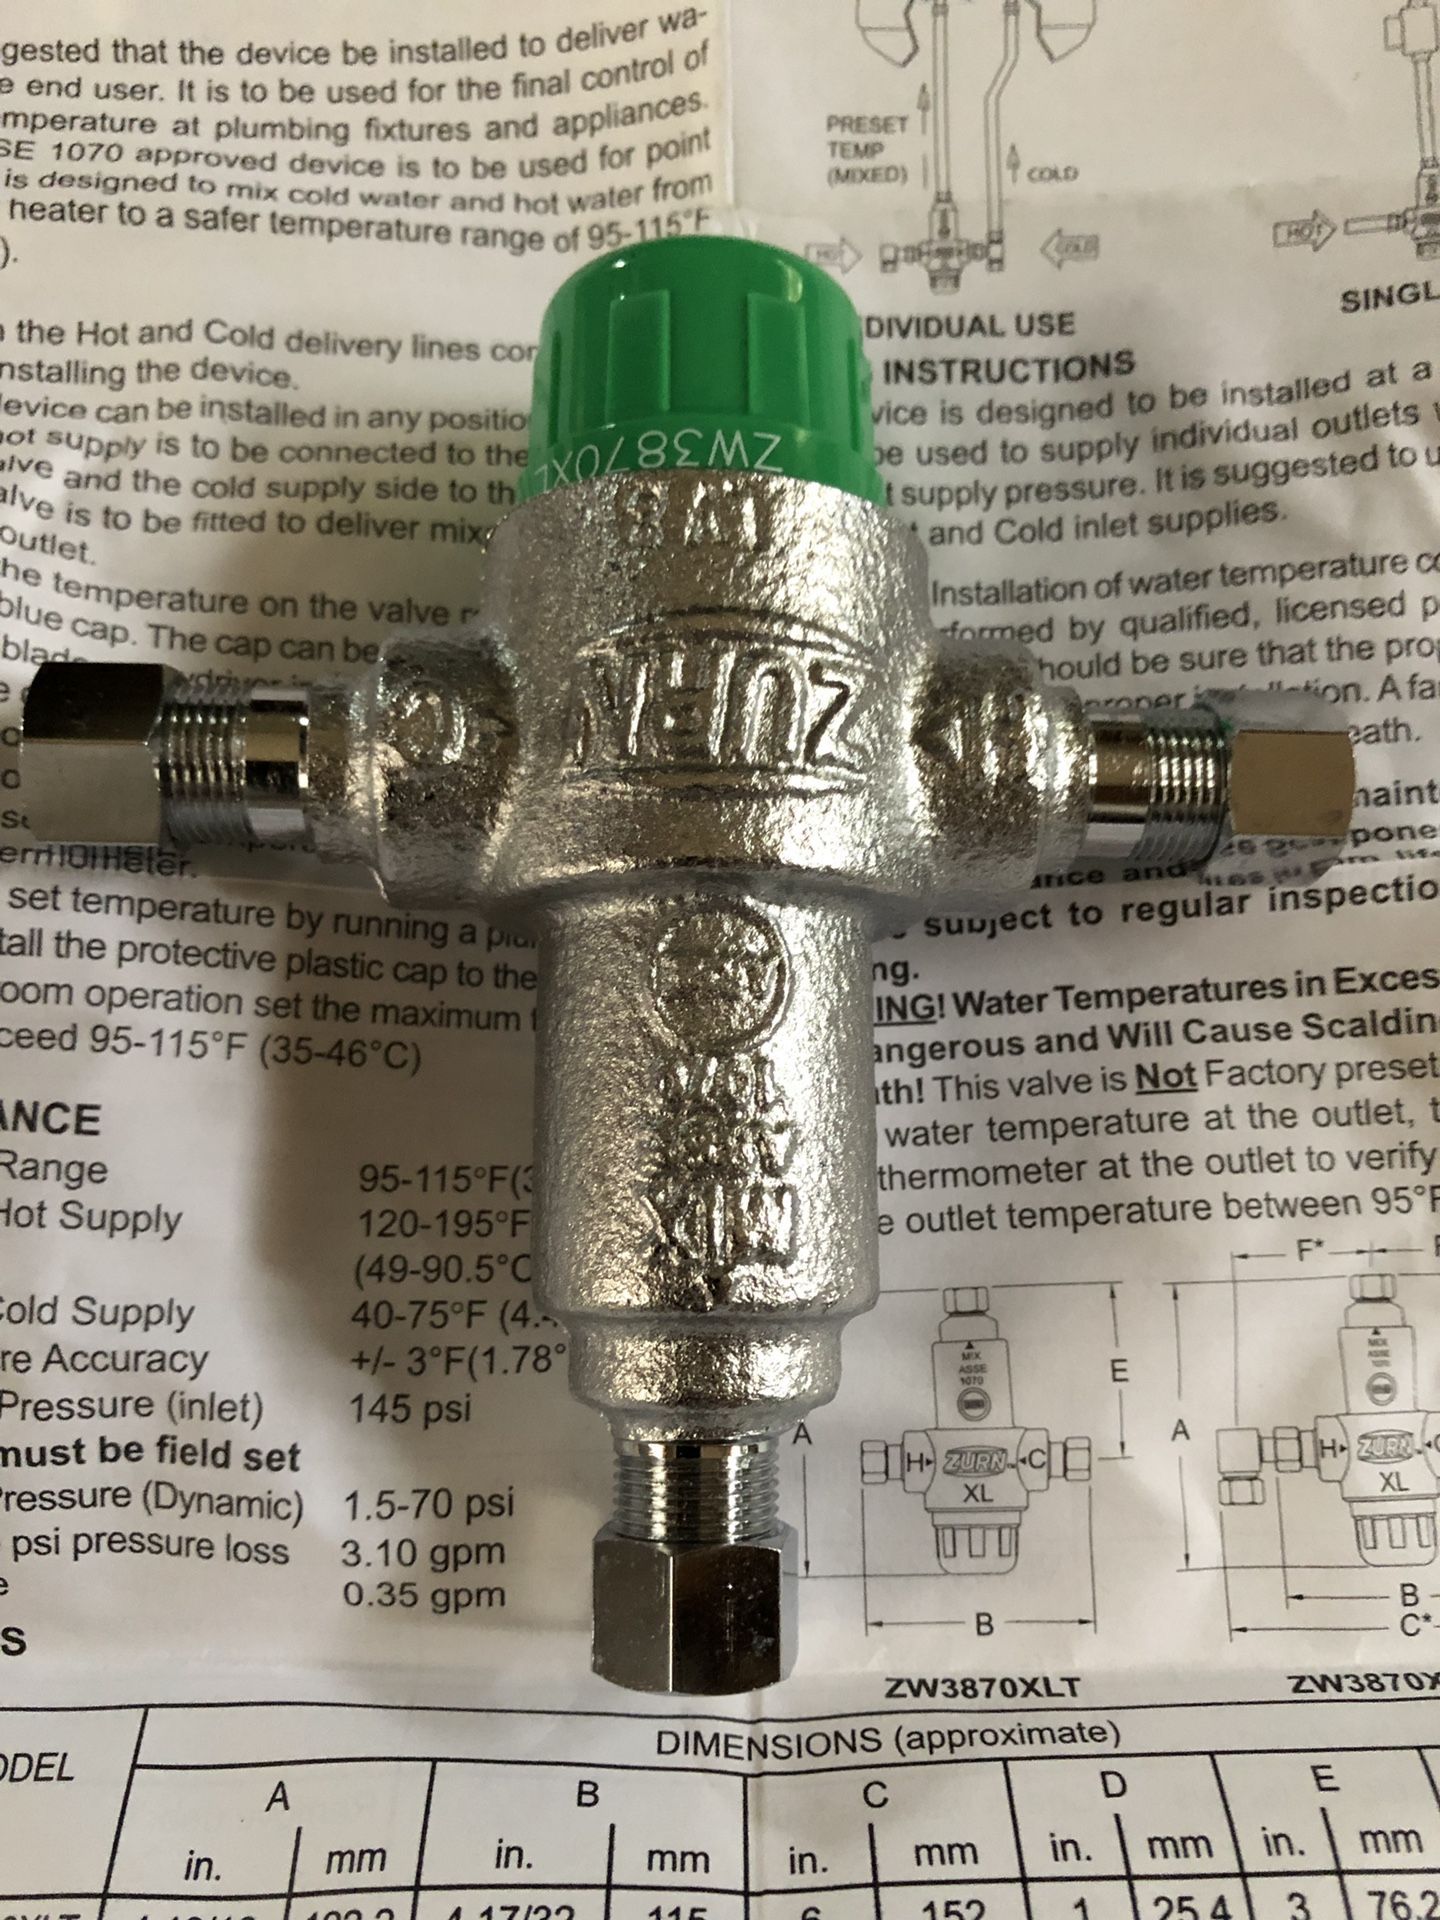 Aqua-Gard Thermostatic Mixing valve, 3/8” Model ZW3870XLT